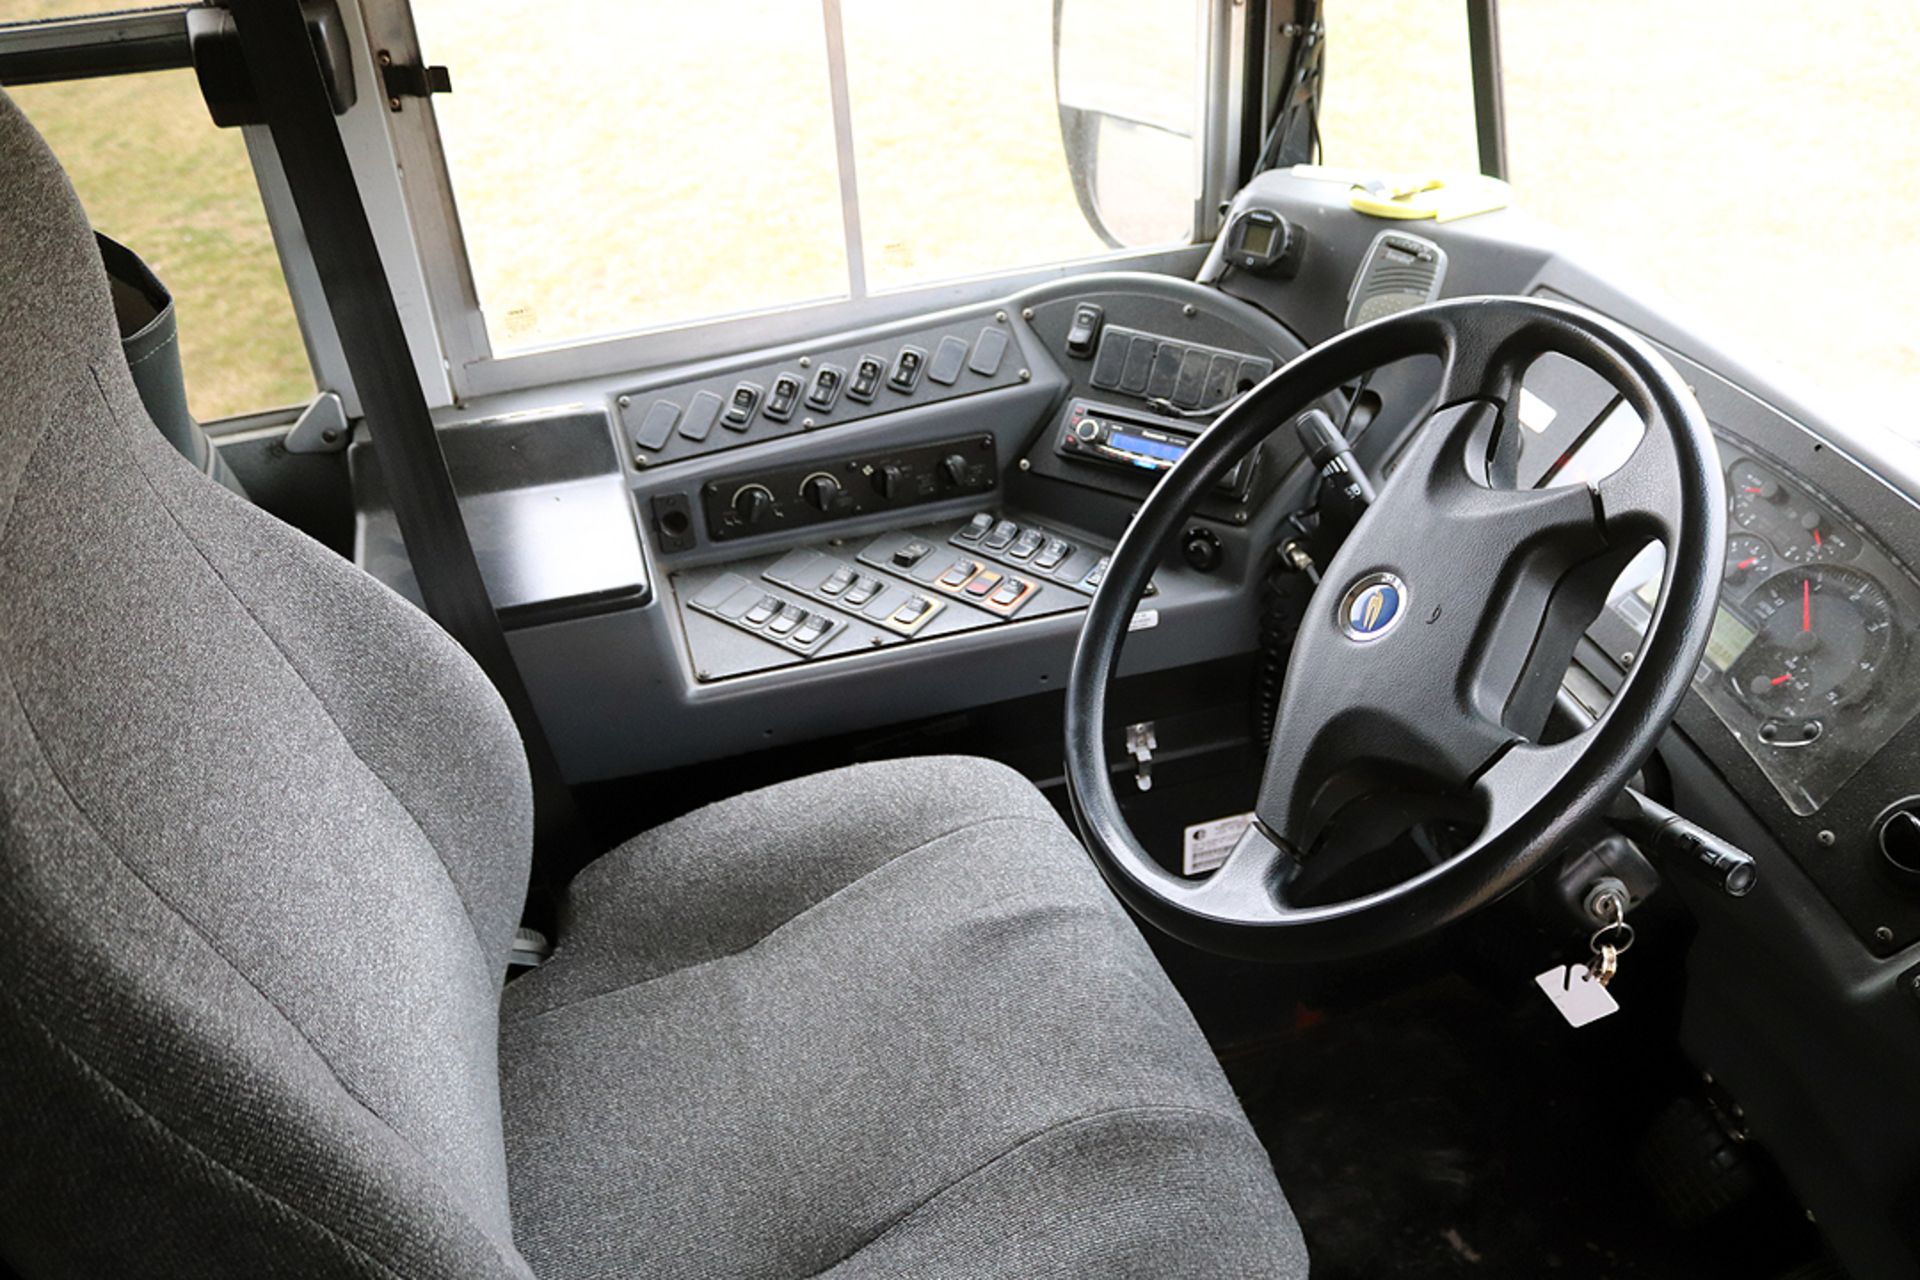 2011 Bluebird 78 Passenger School Bus with Cummins Engine, 110,600 miles, VIN 1BAKJCPA5BF278666 - Image 10 of 16